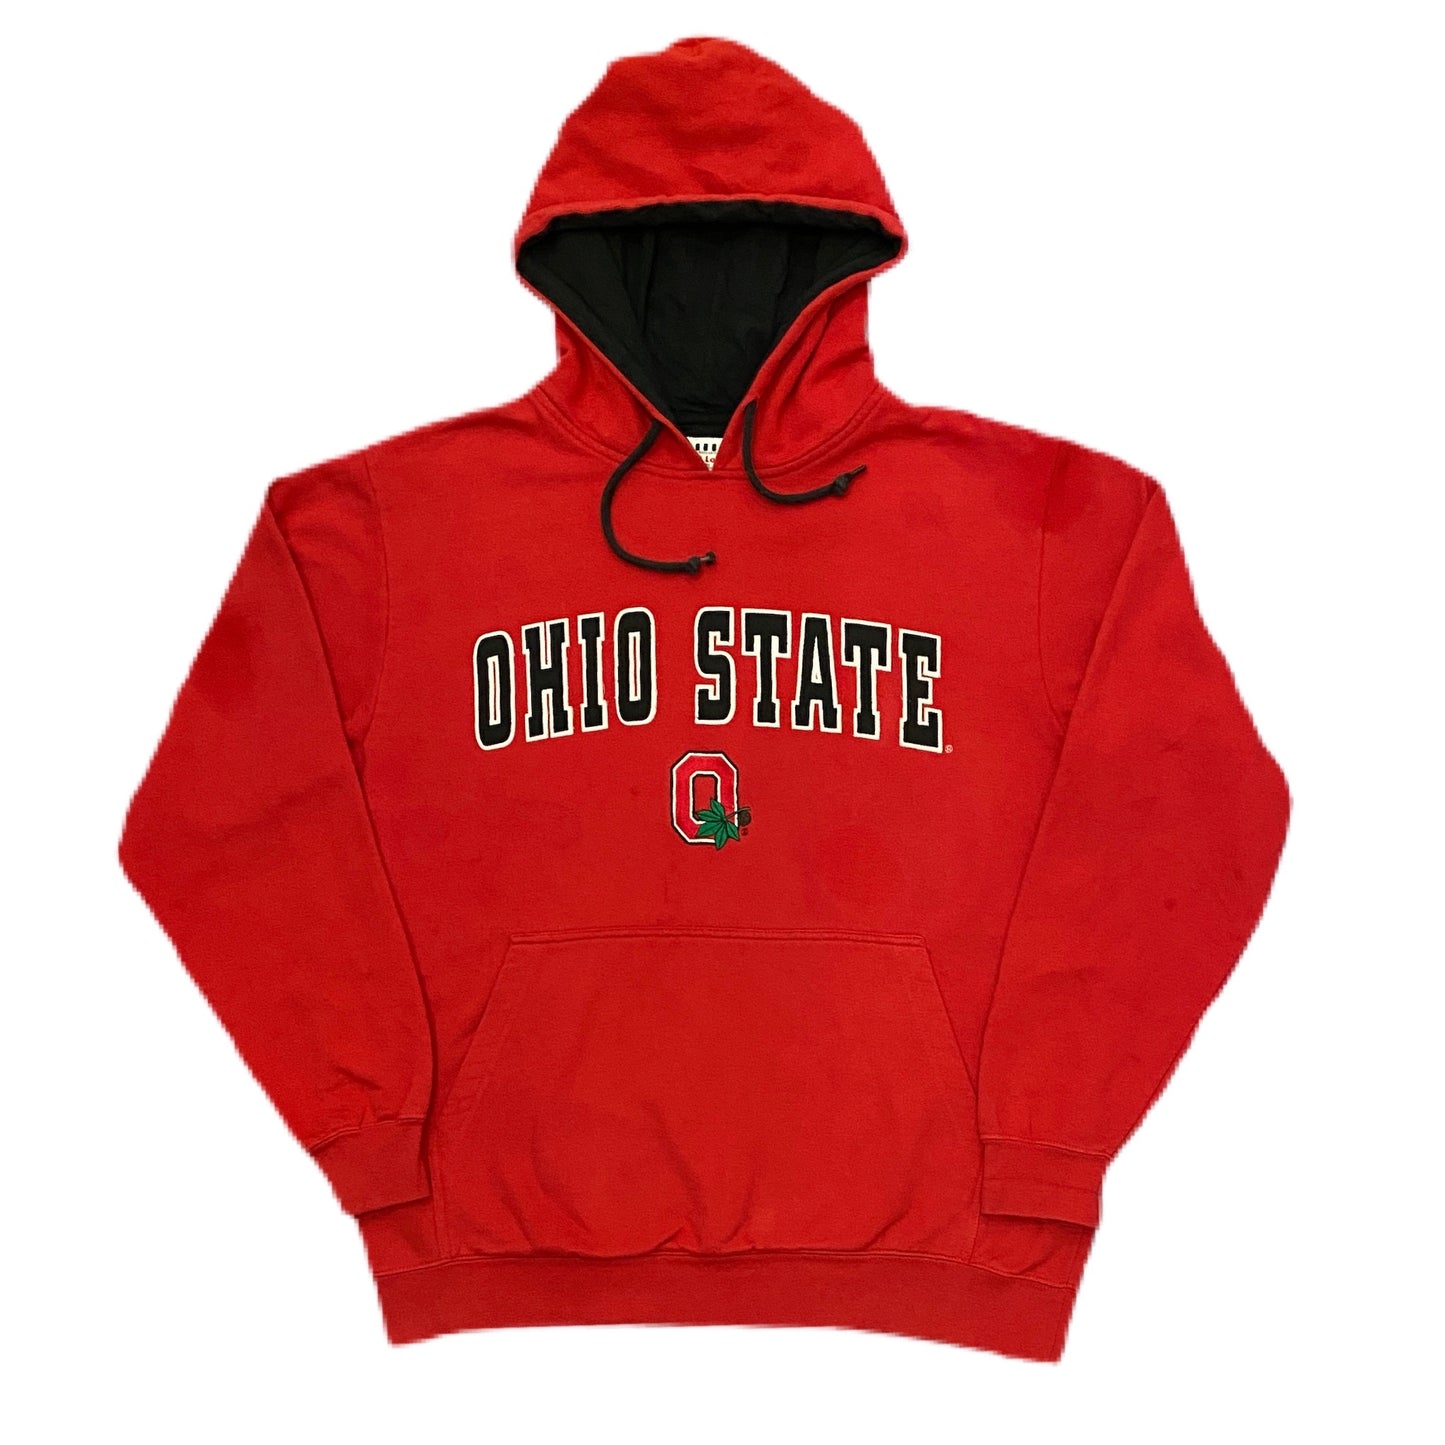 NFL Ohio State hoodie (L)